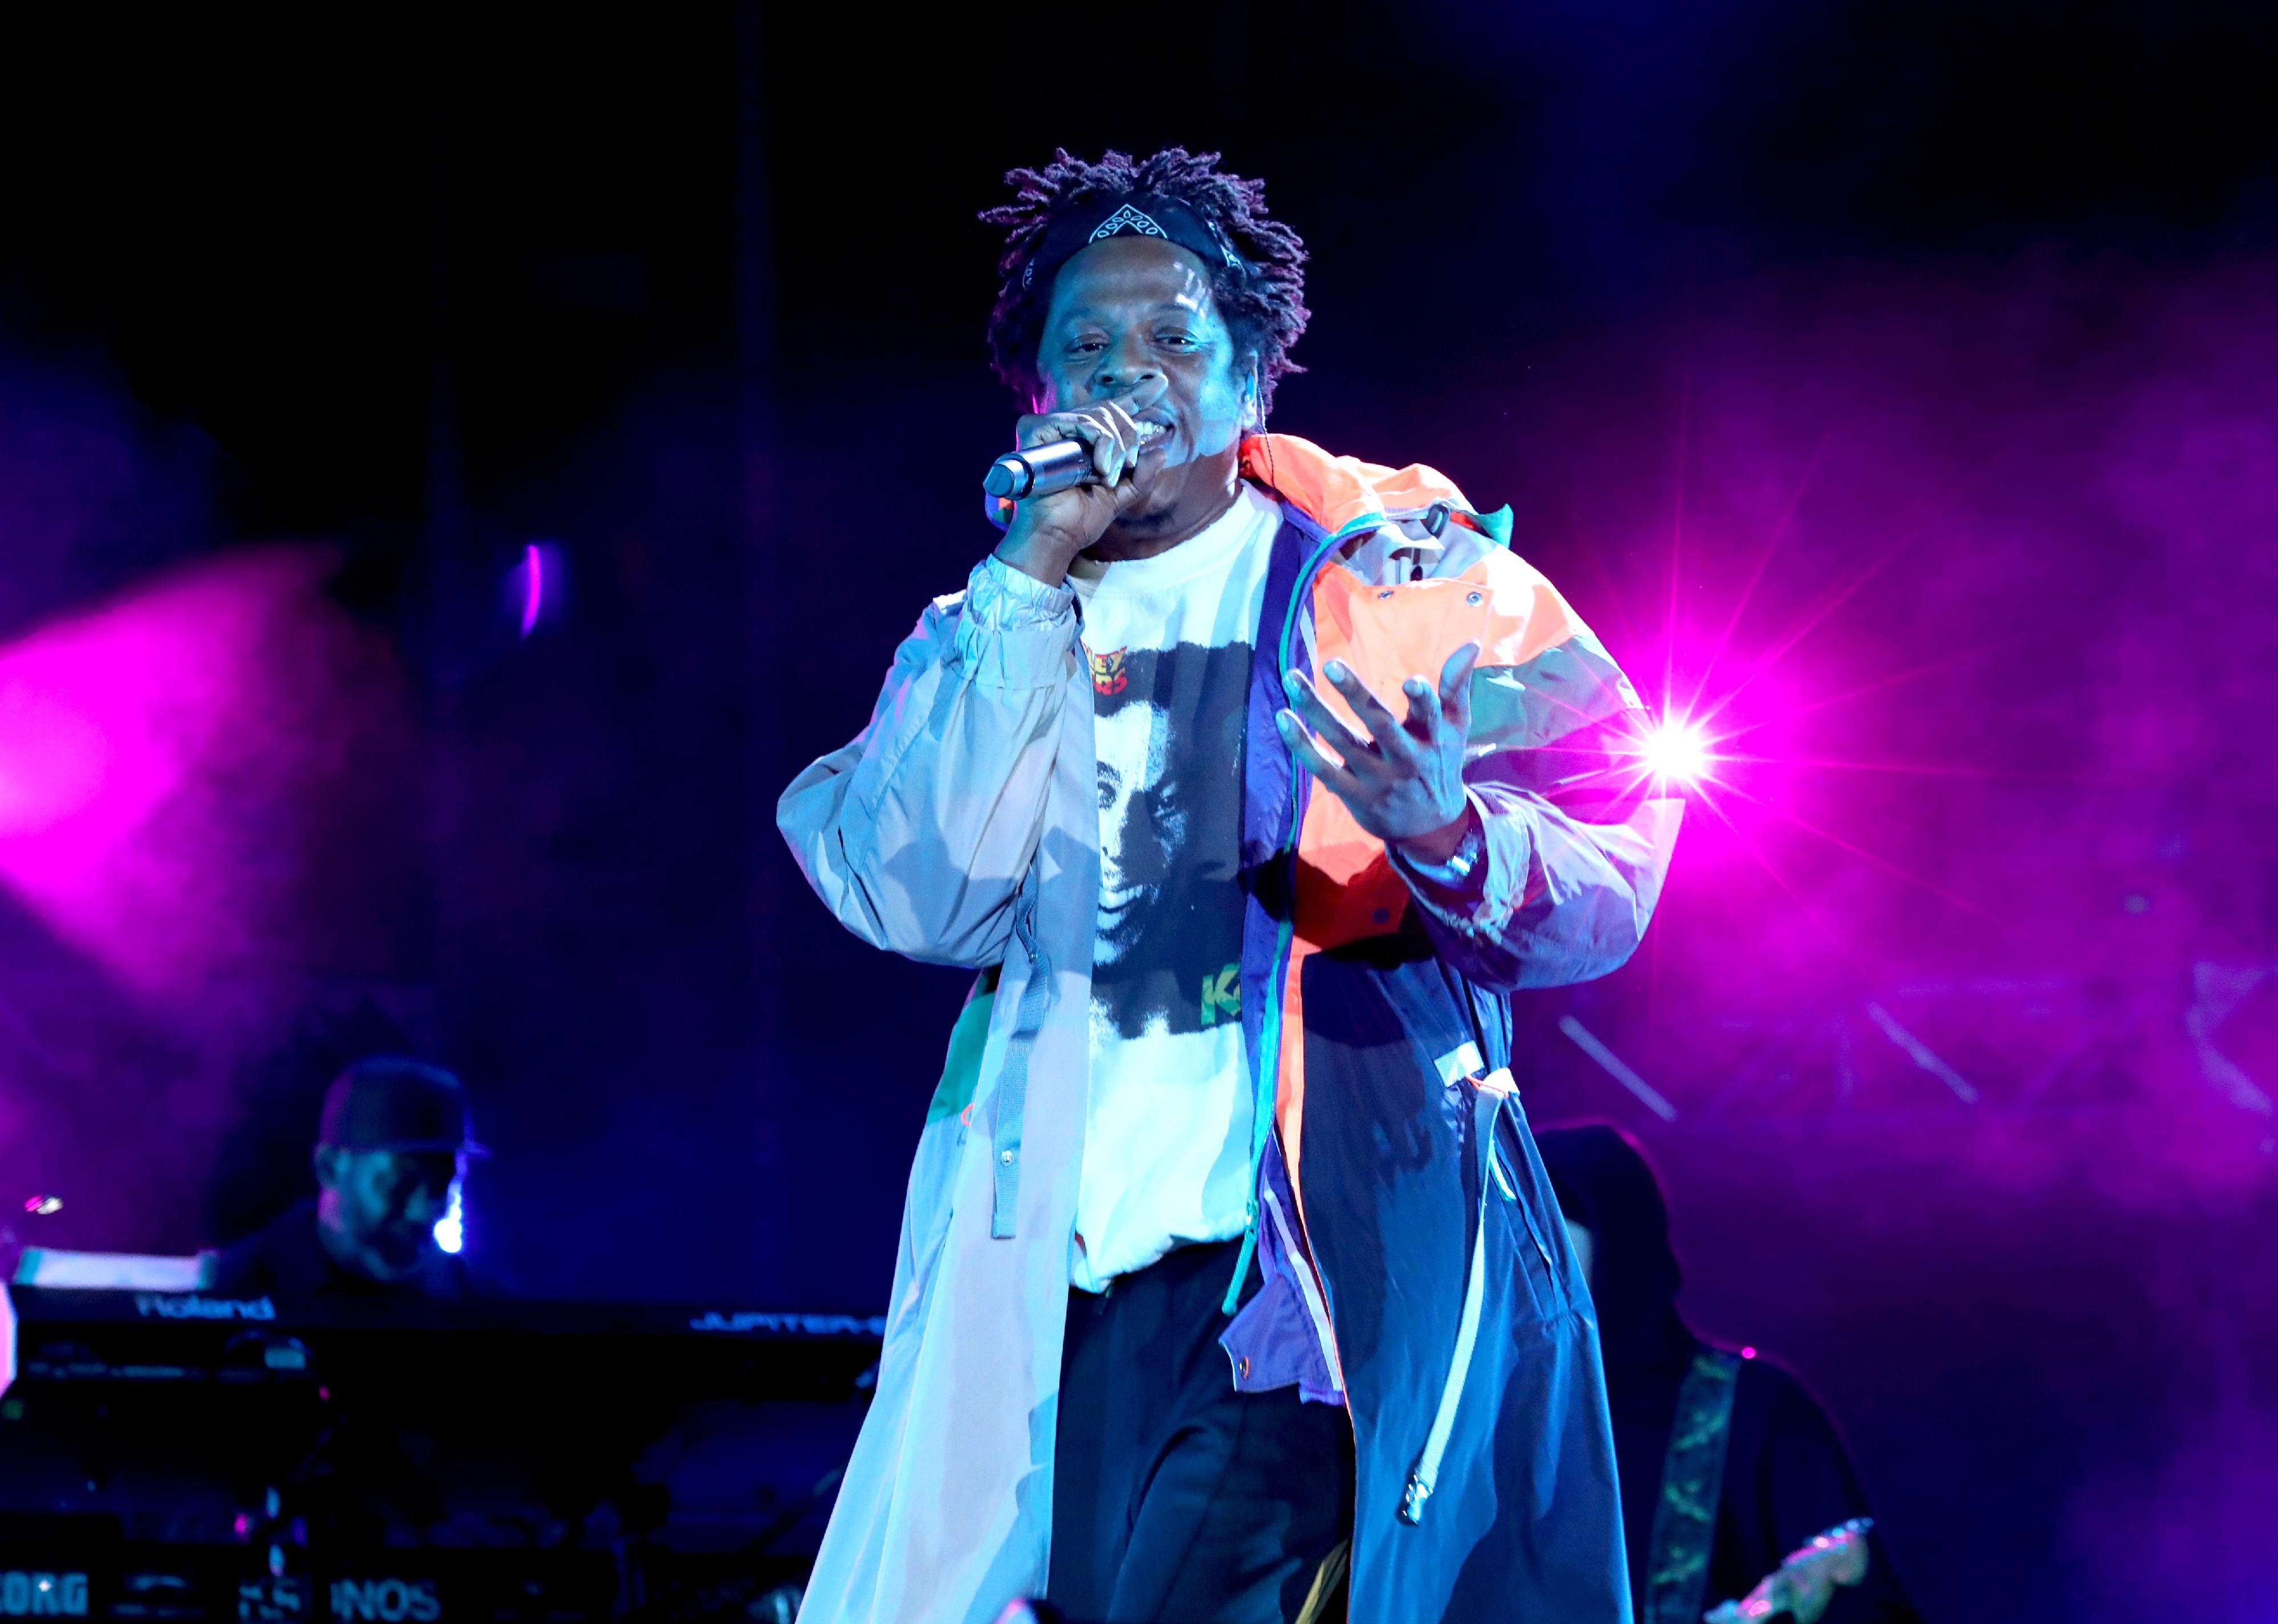 Jay-Z onstage in a Bob Marley shirt.